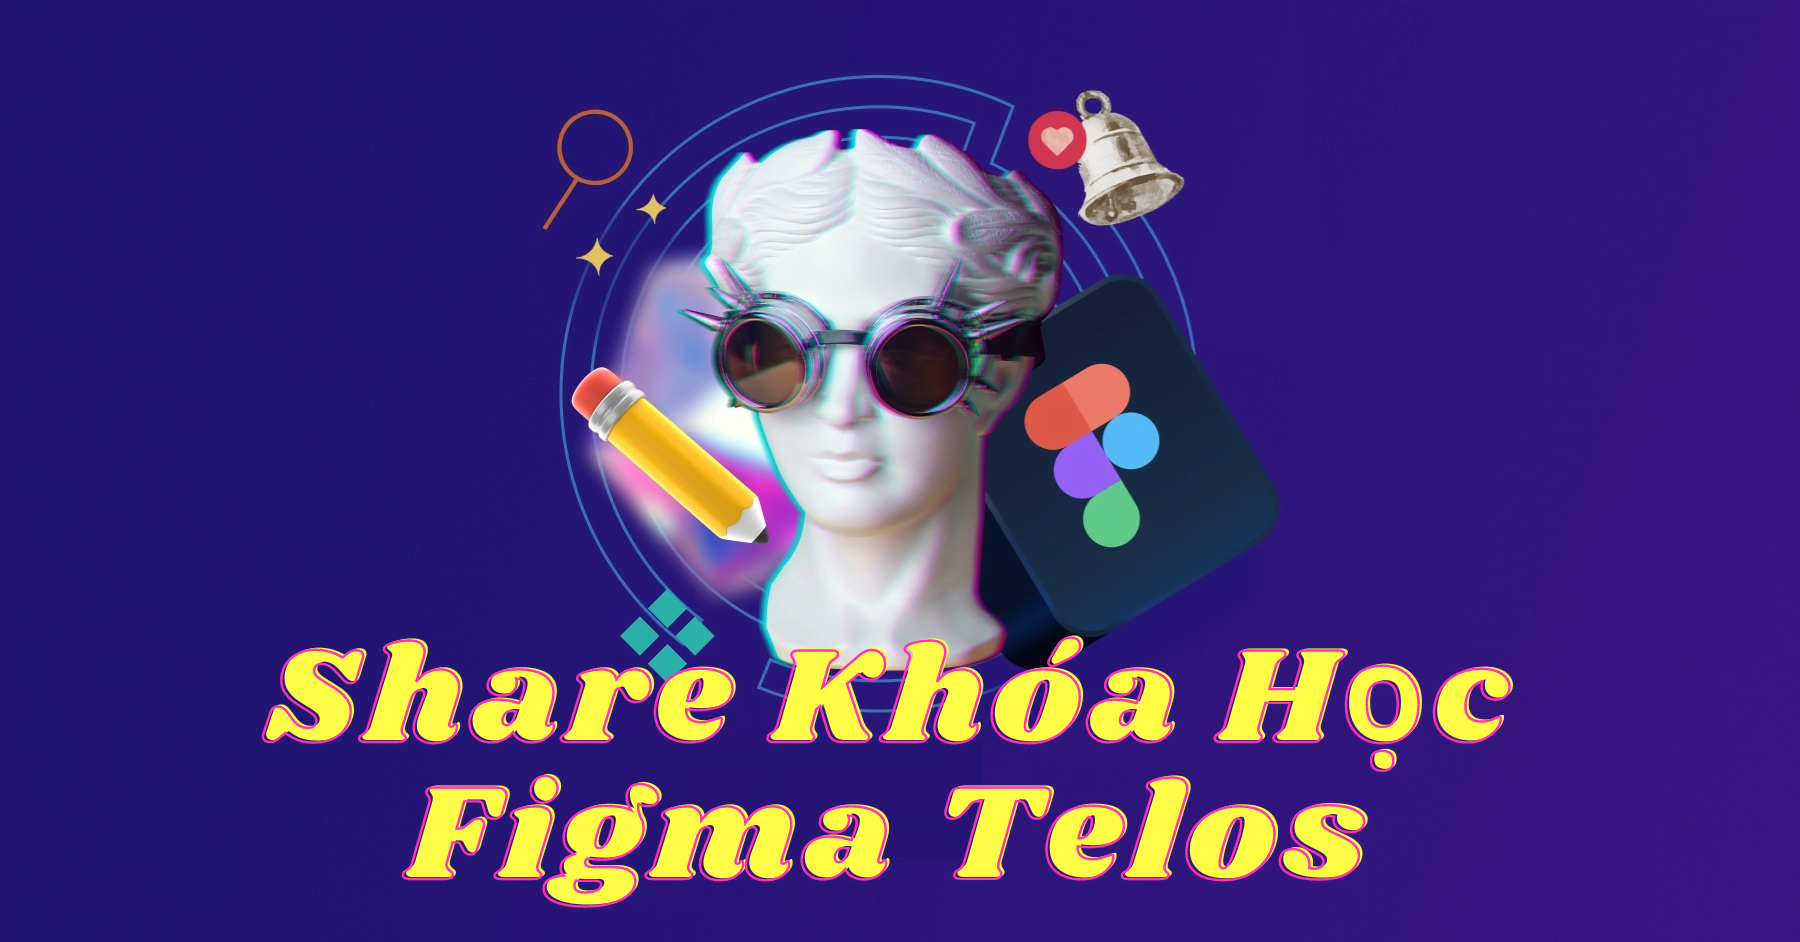 Share Khóa Học Figma Telos